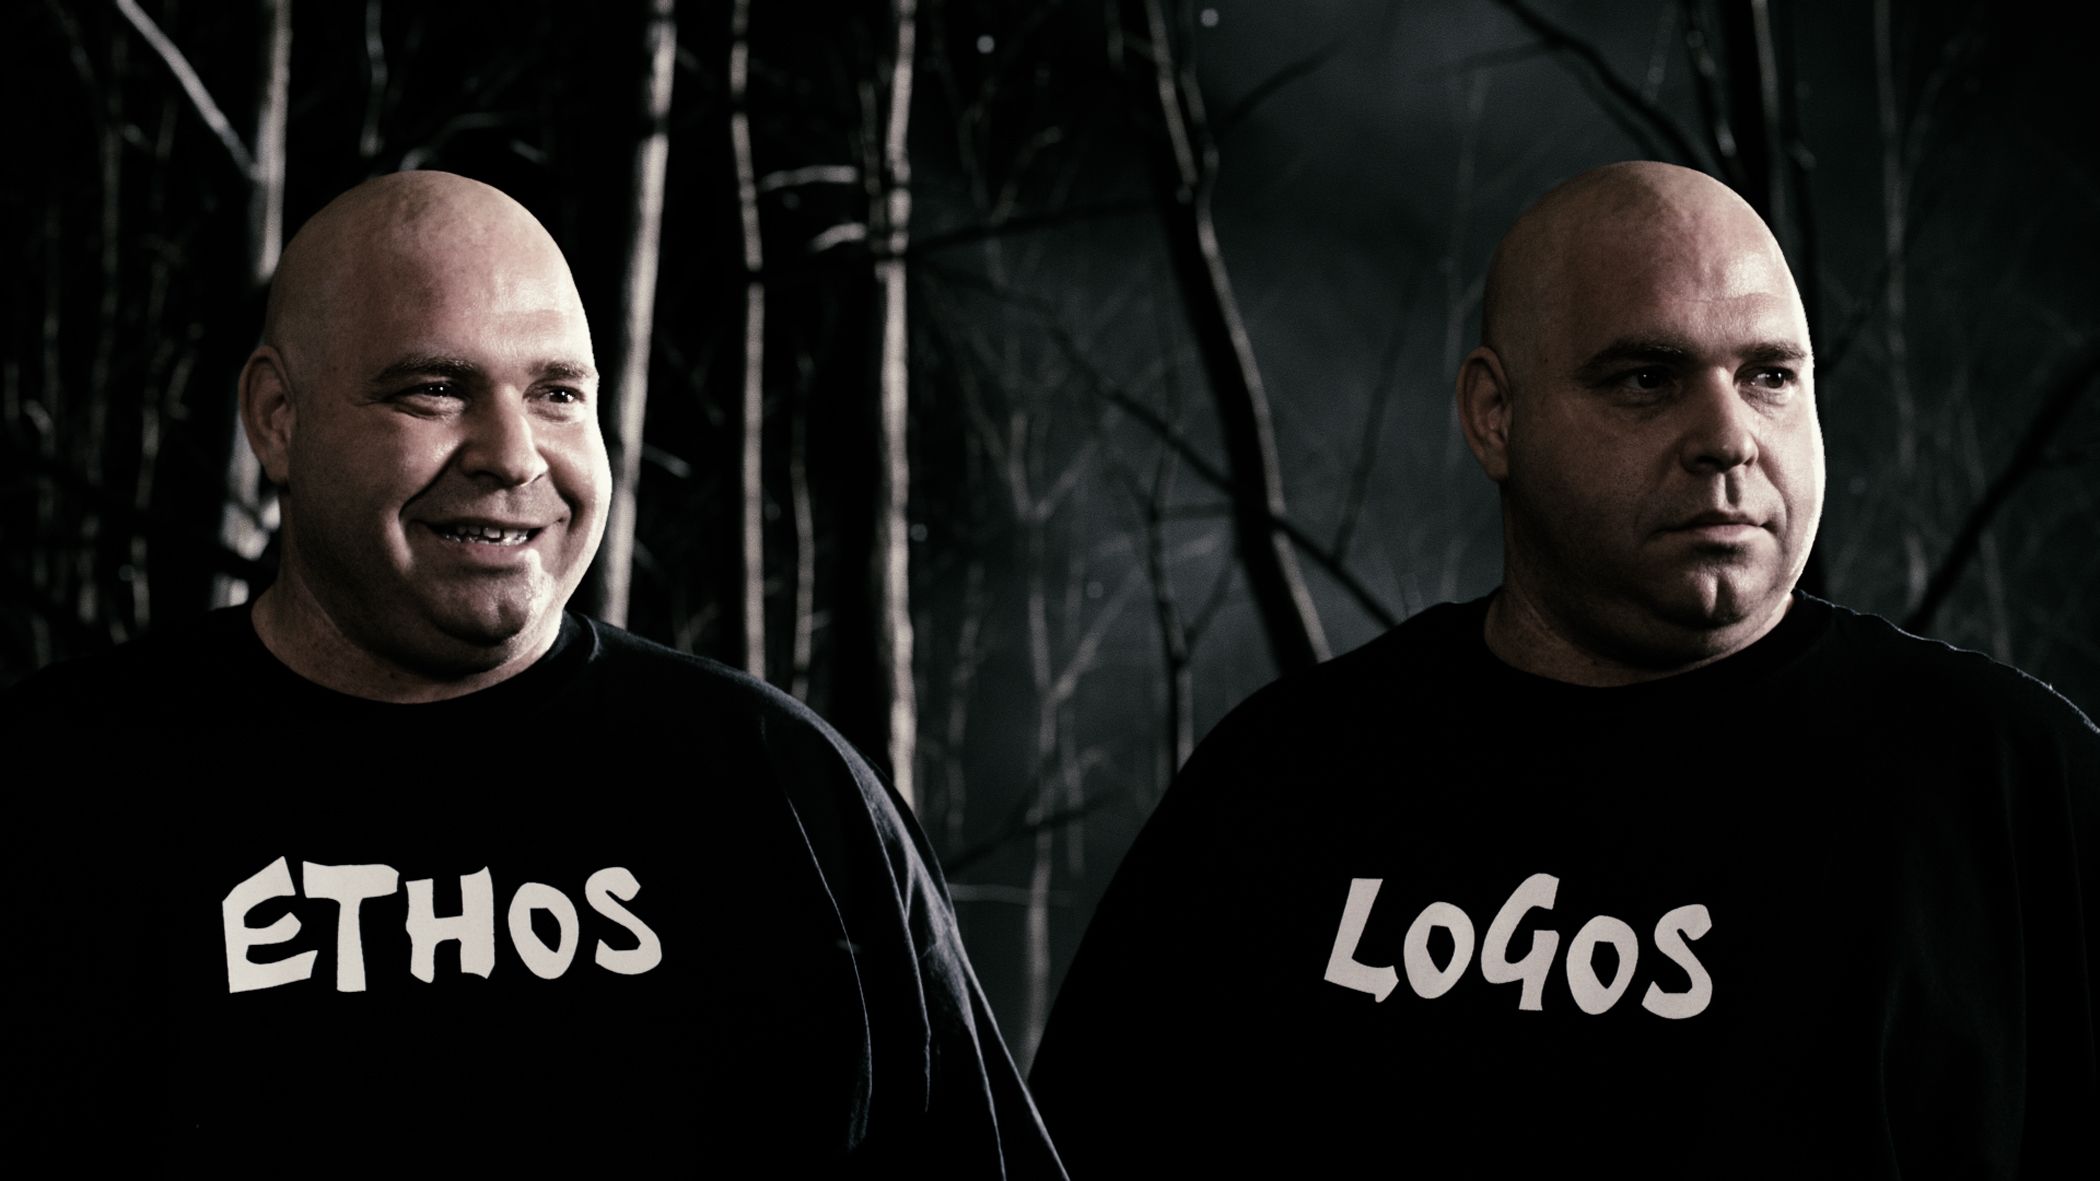 Louis Lombardi as Phobos